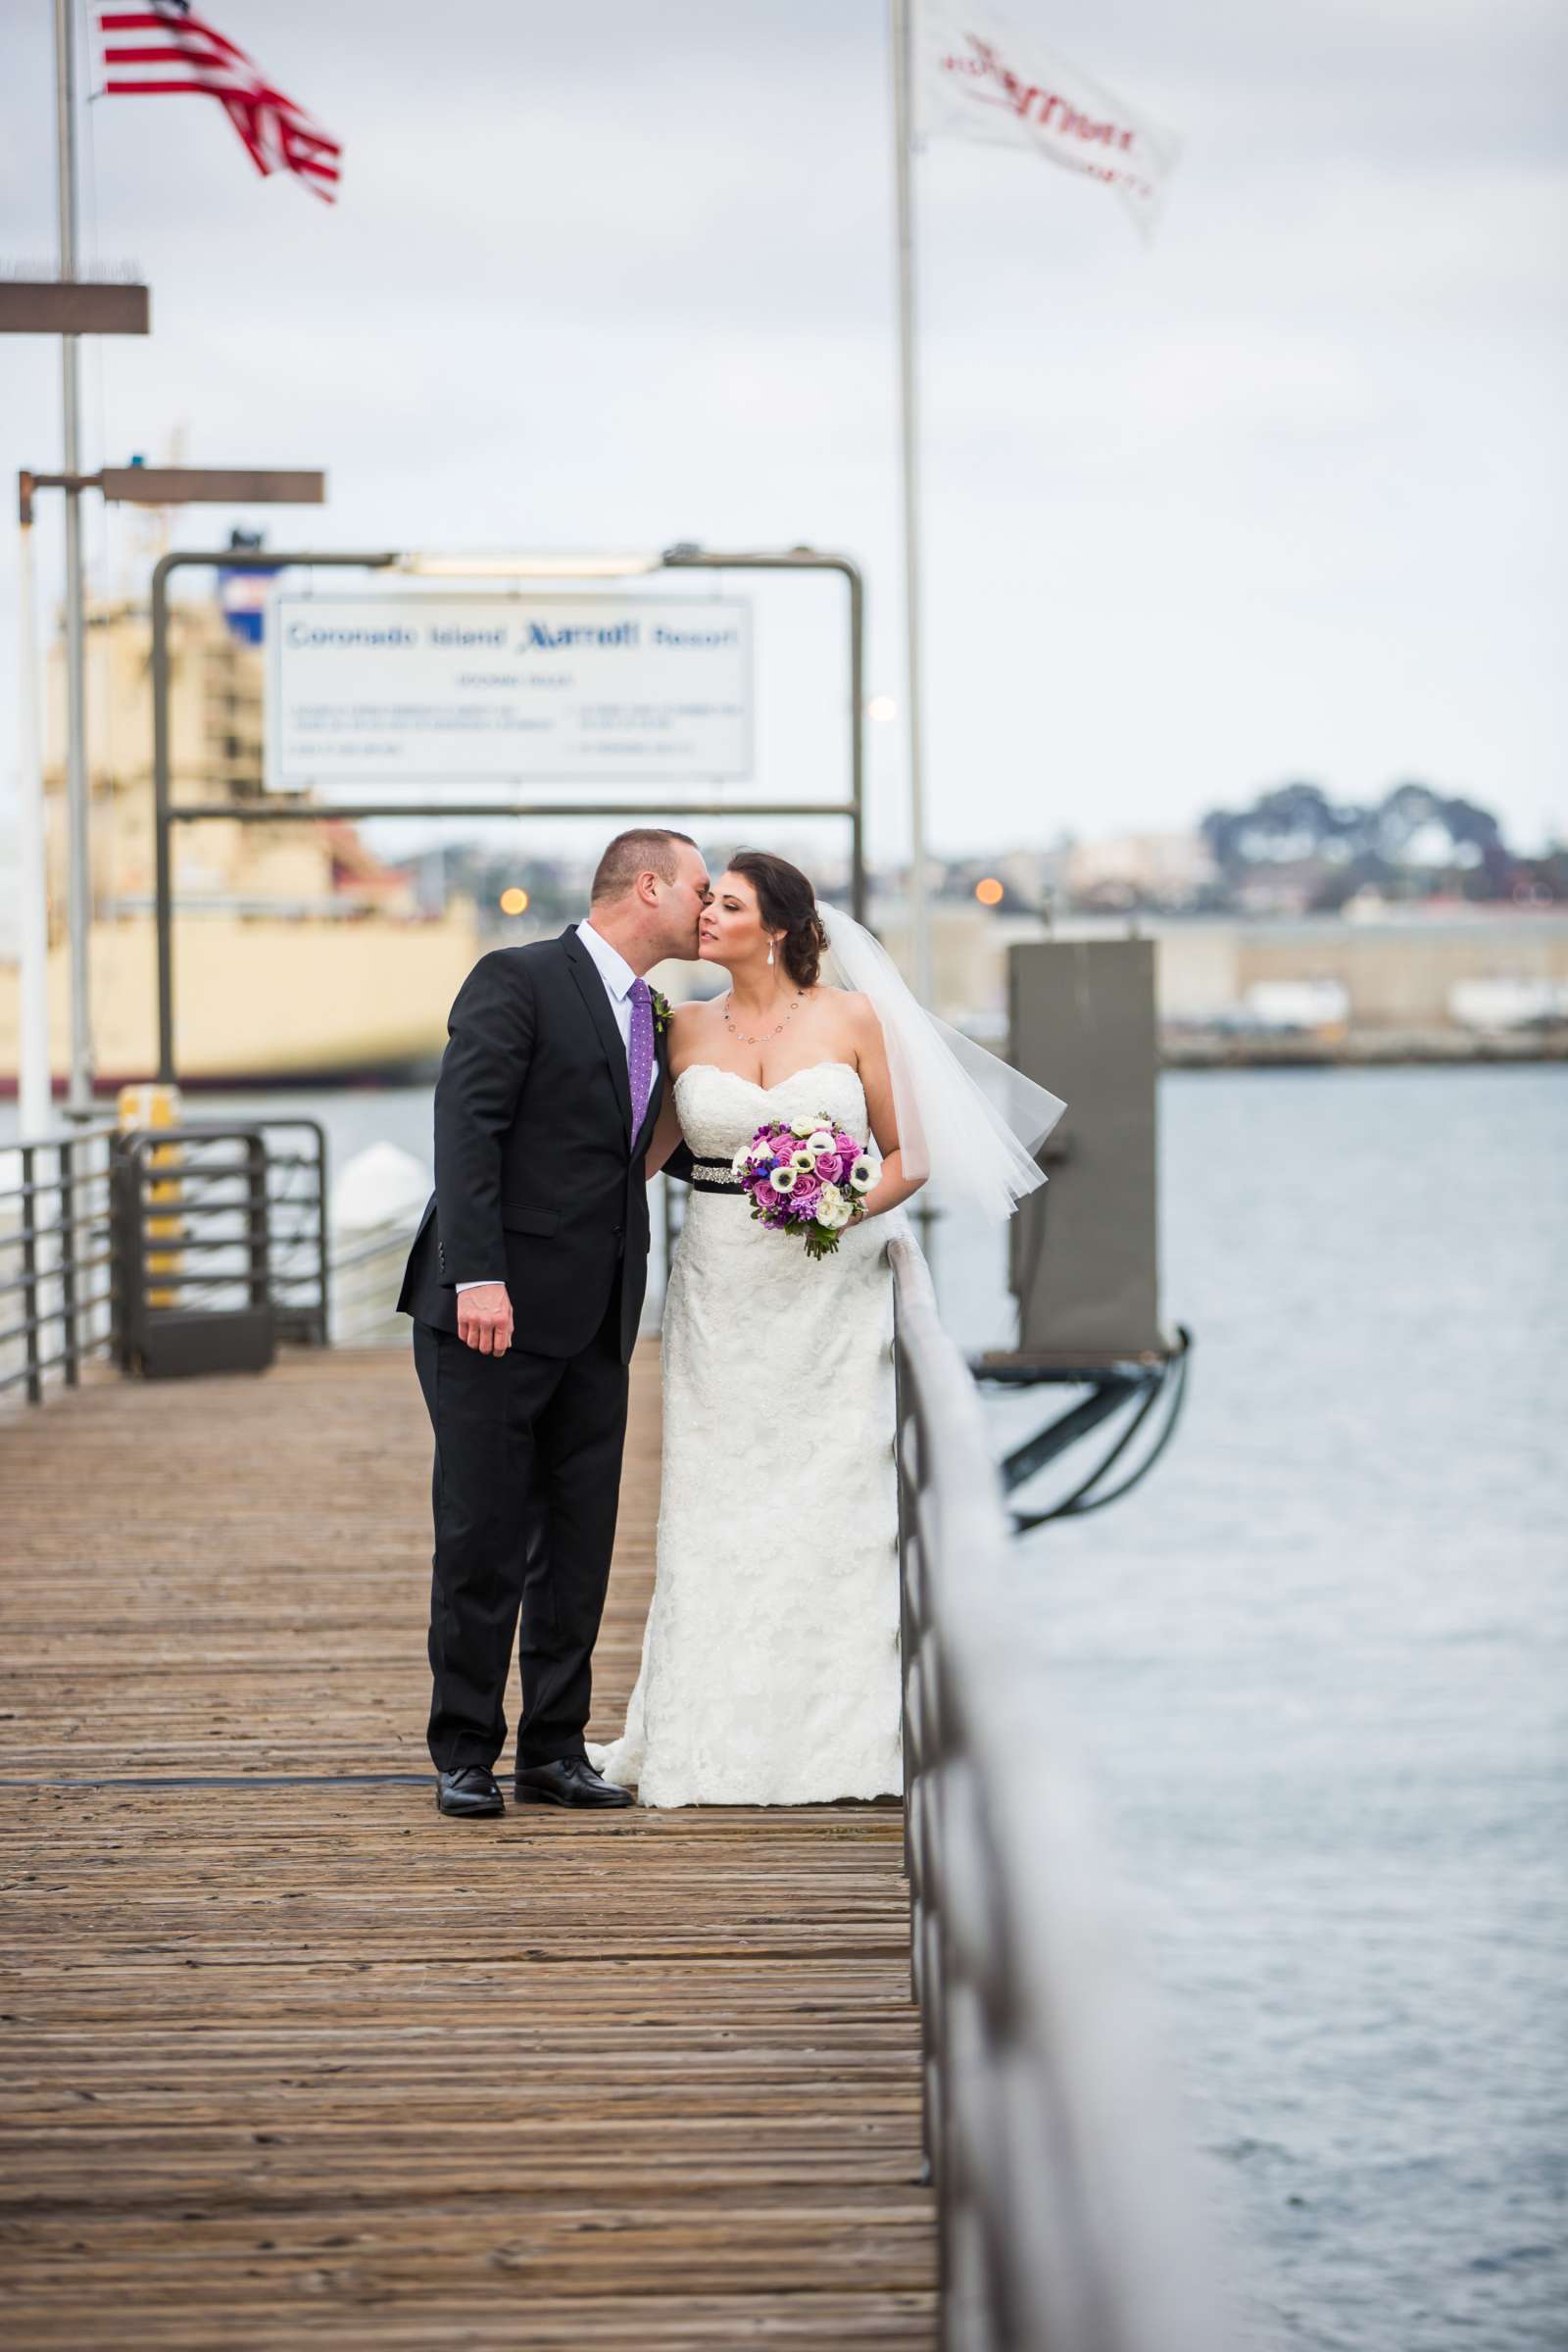 Coronado Island Marriott Resort & Spa Wedding, Leigh Ann and James Wedding Photo #13 by True Photography